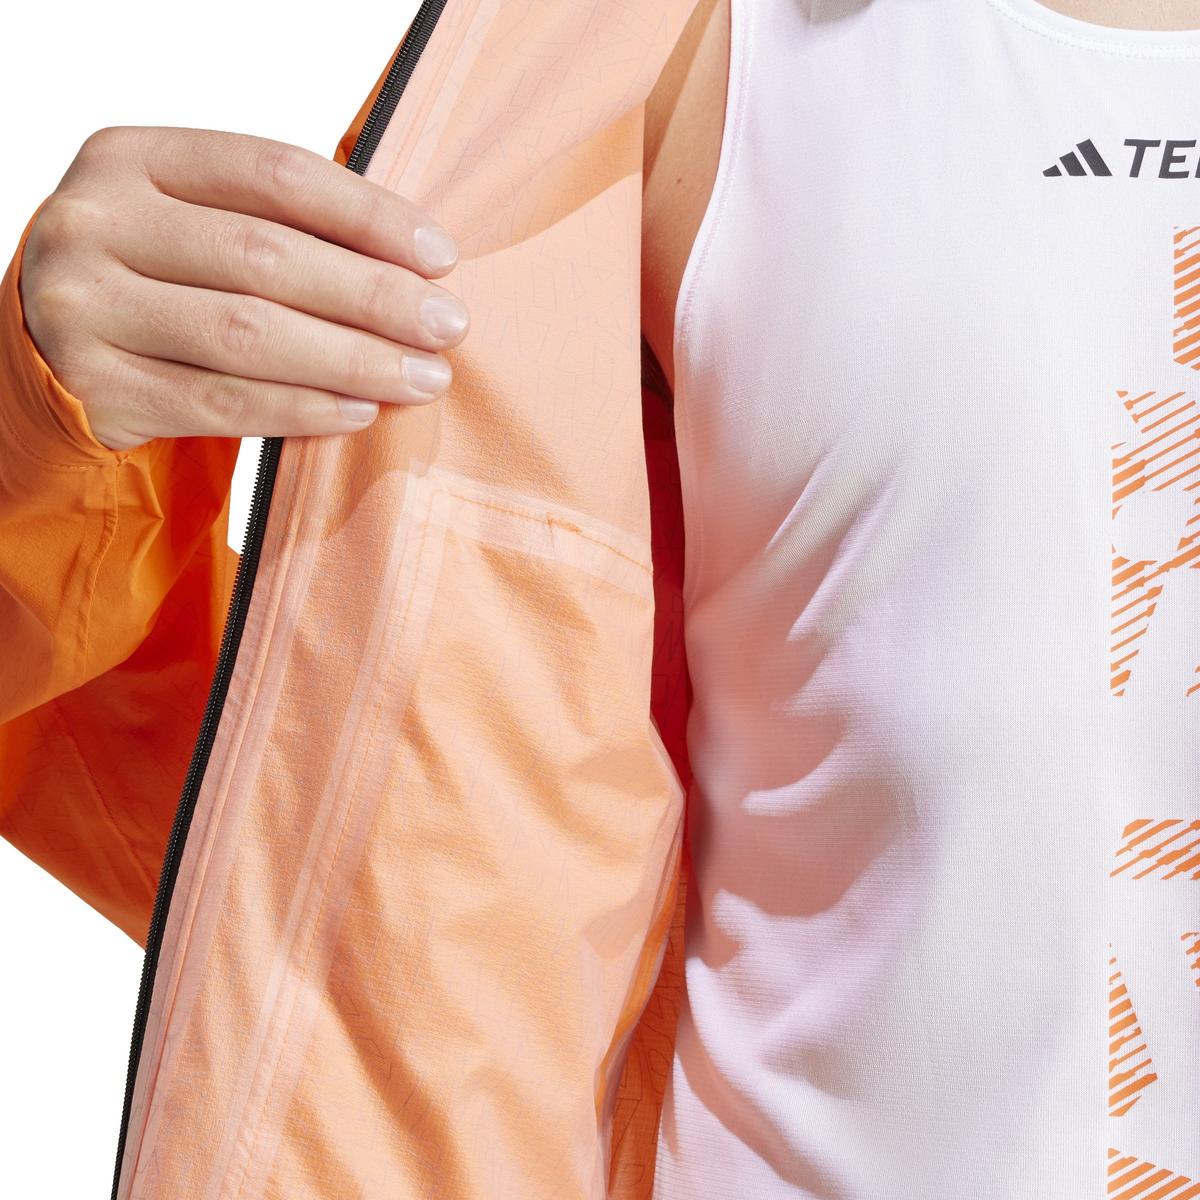 Adidas Terrex Men's Xperior Light Rain Jacket - Orange